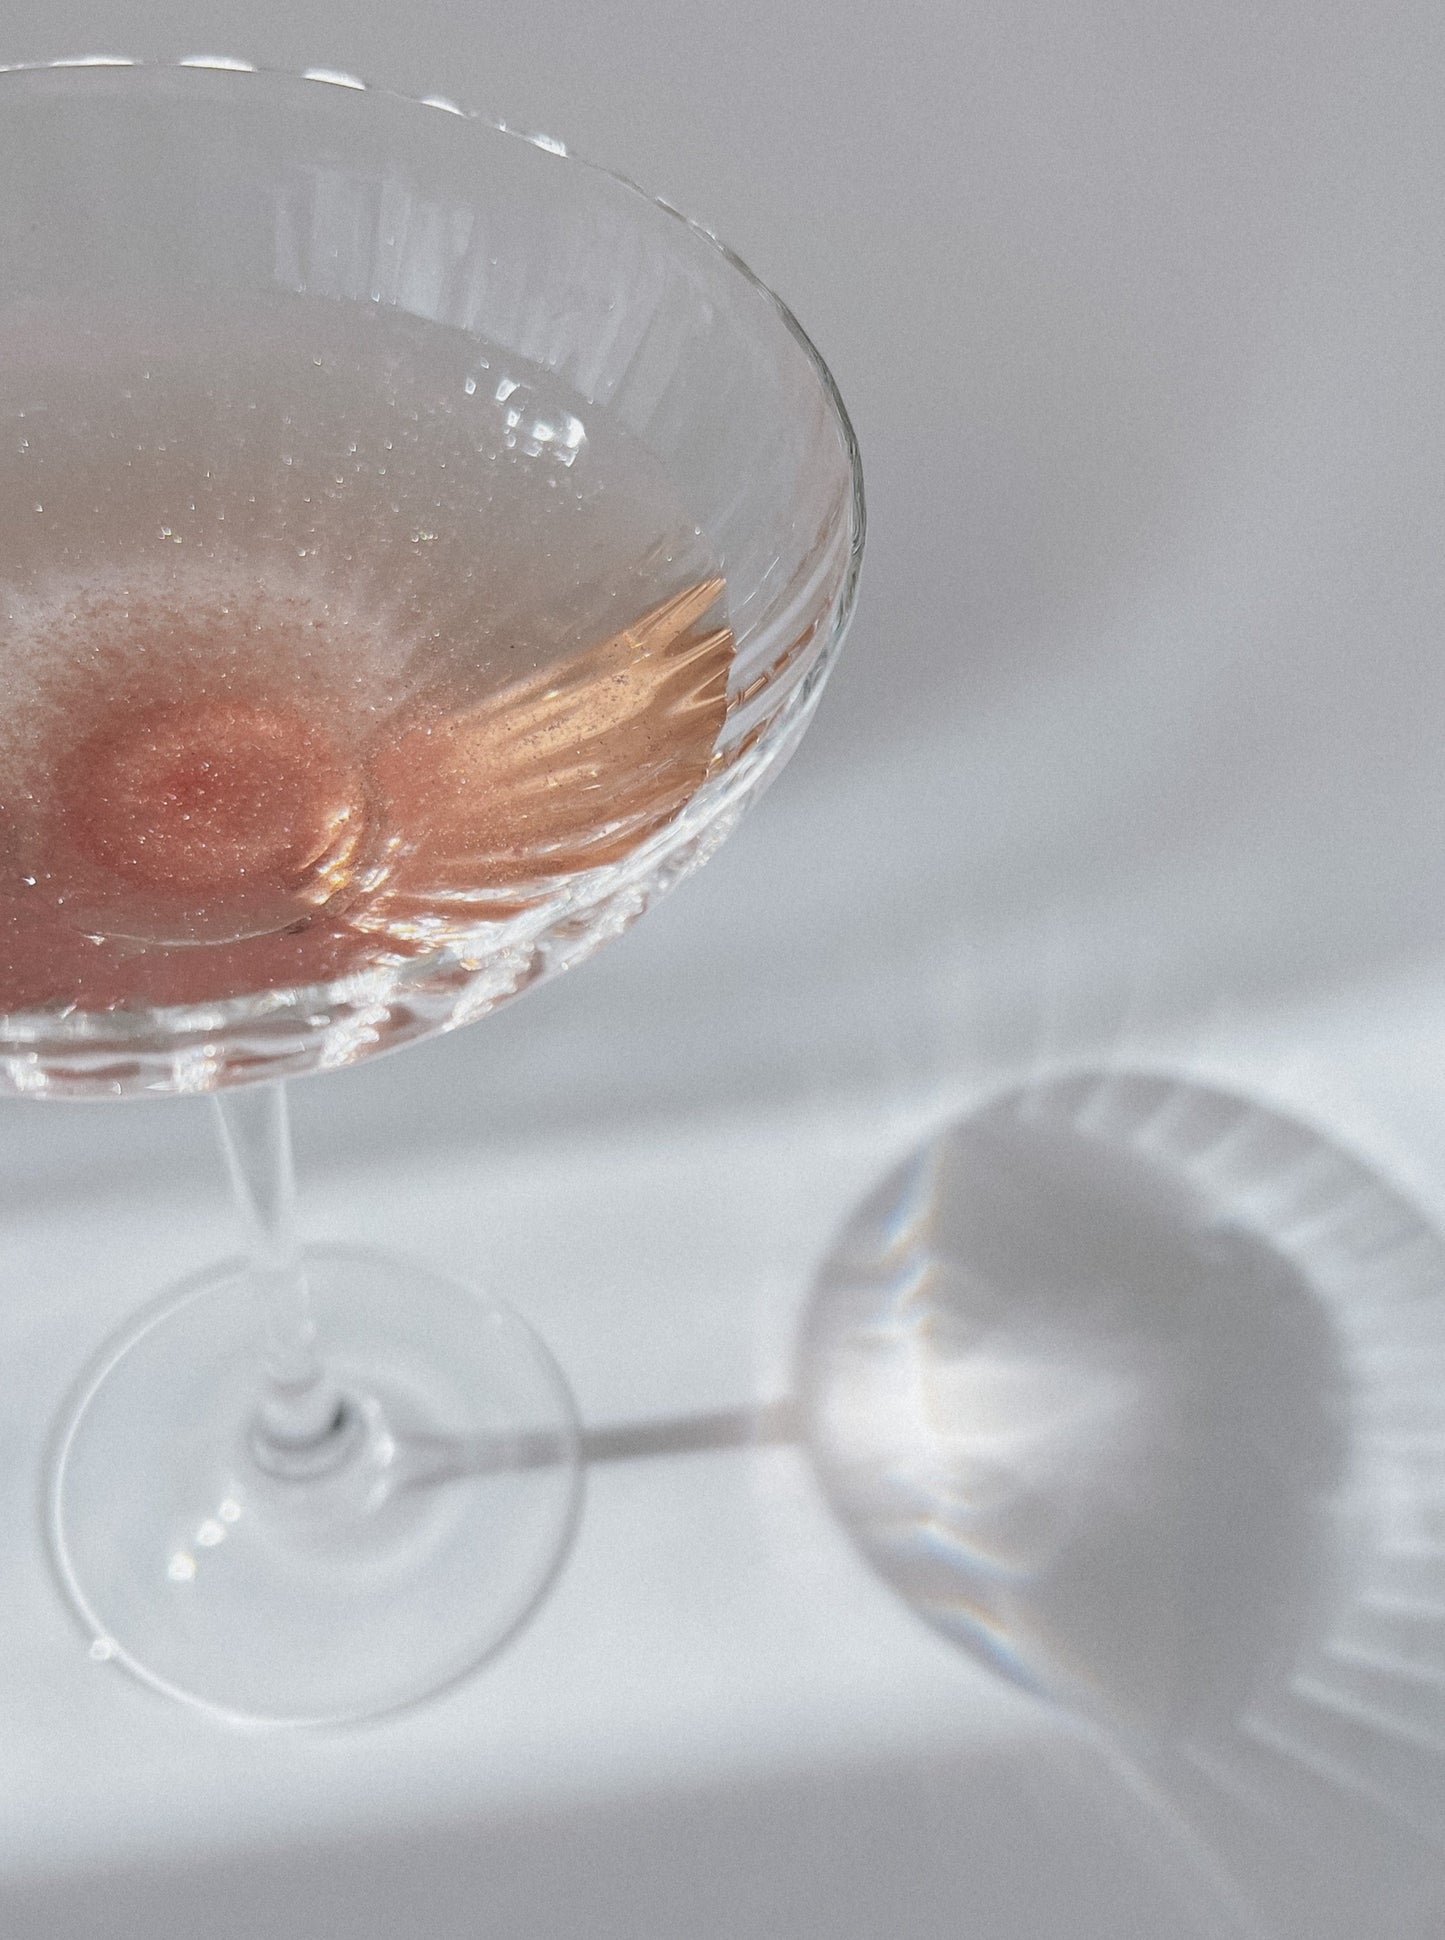 Cocktailglas Symetrie | 210ml